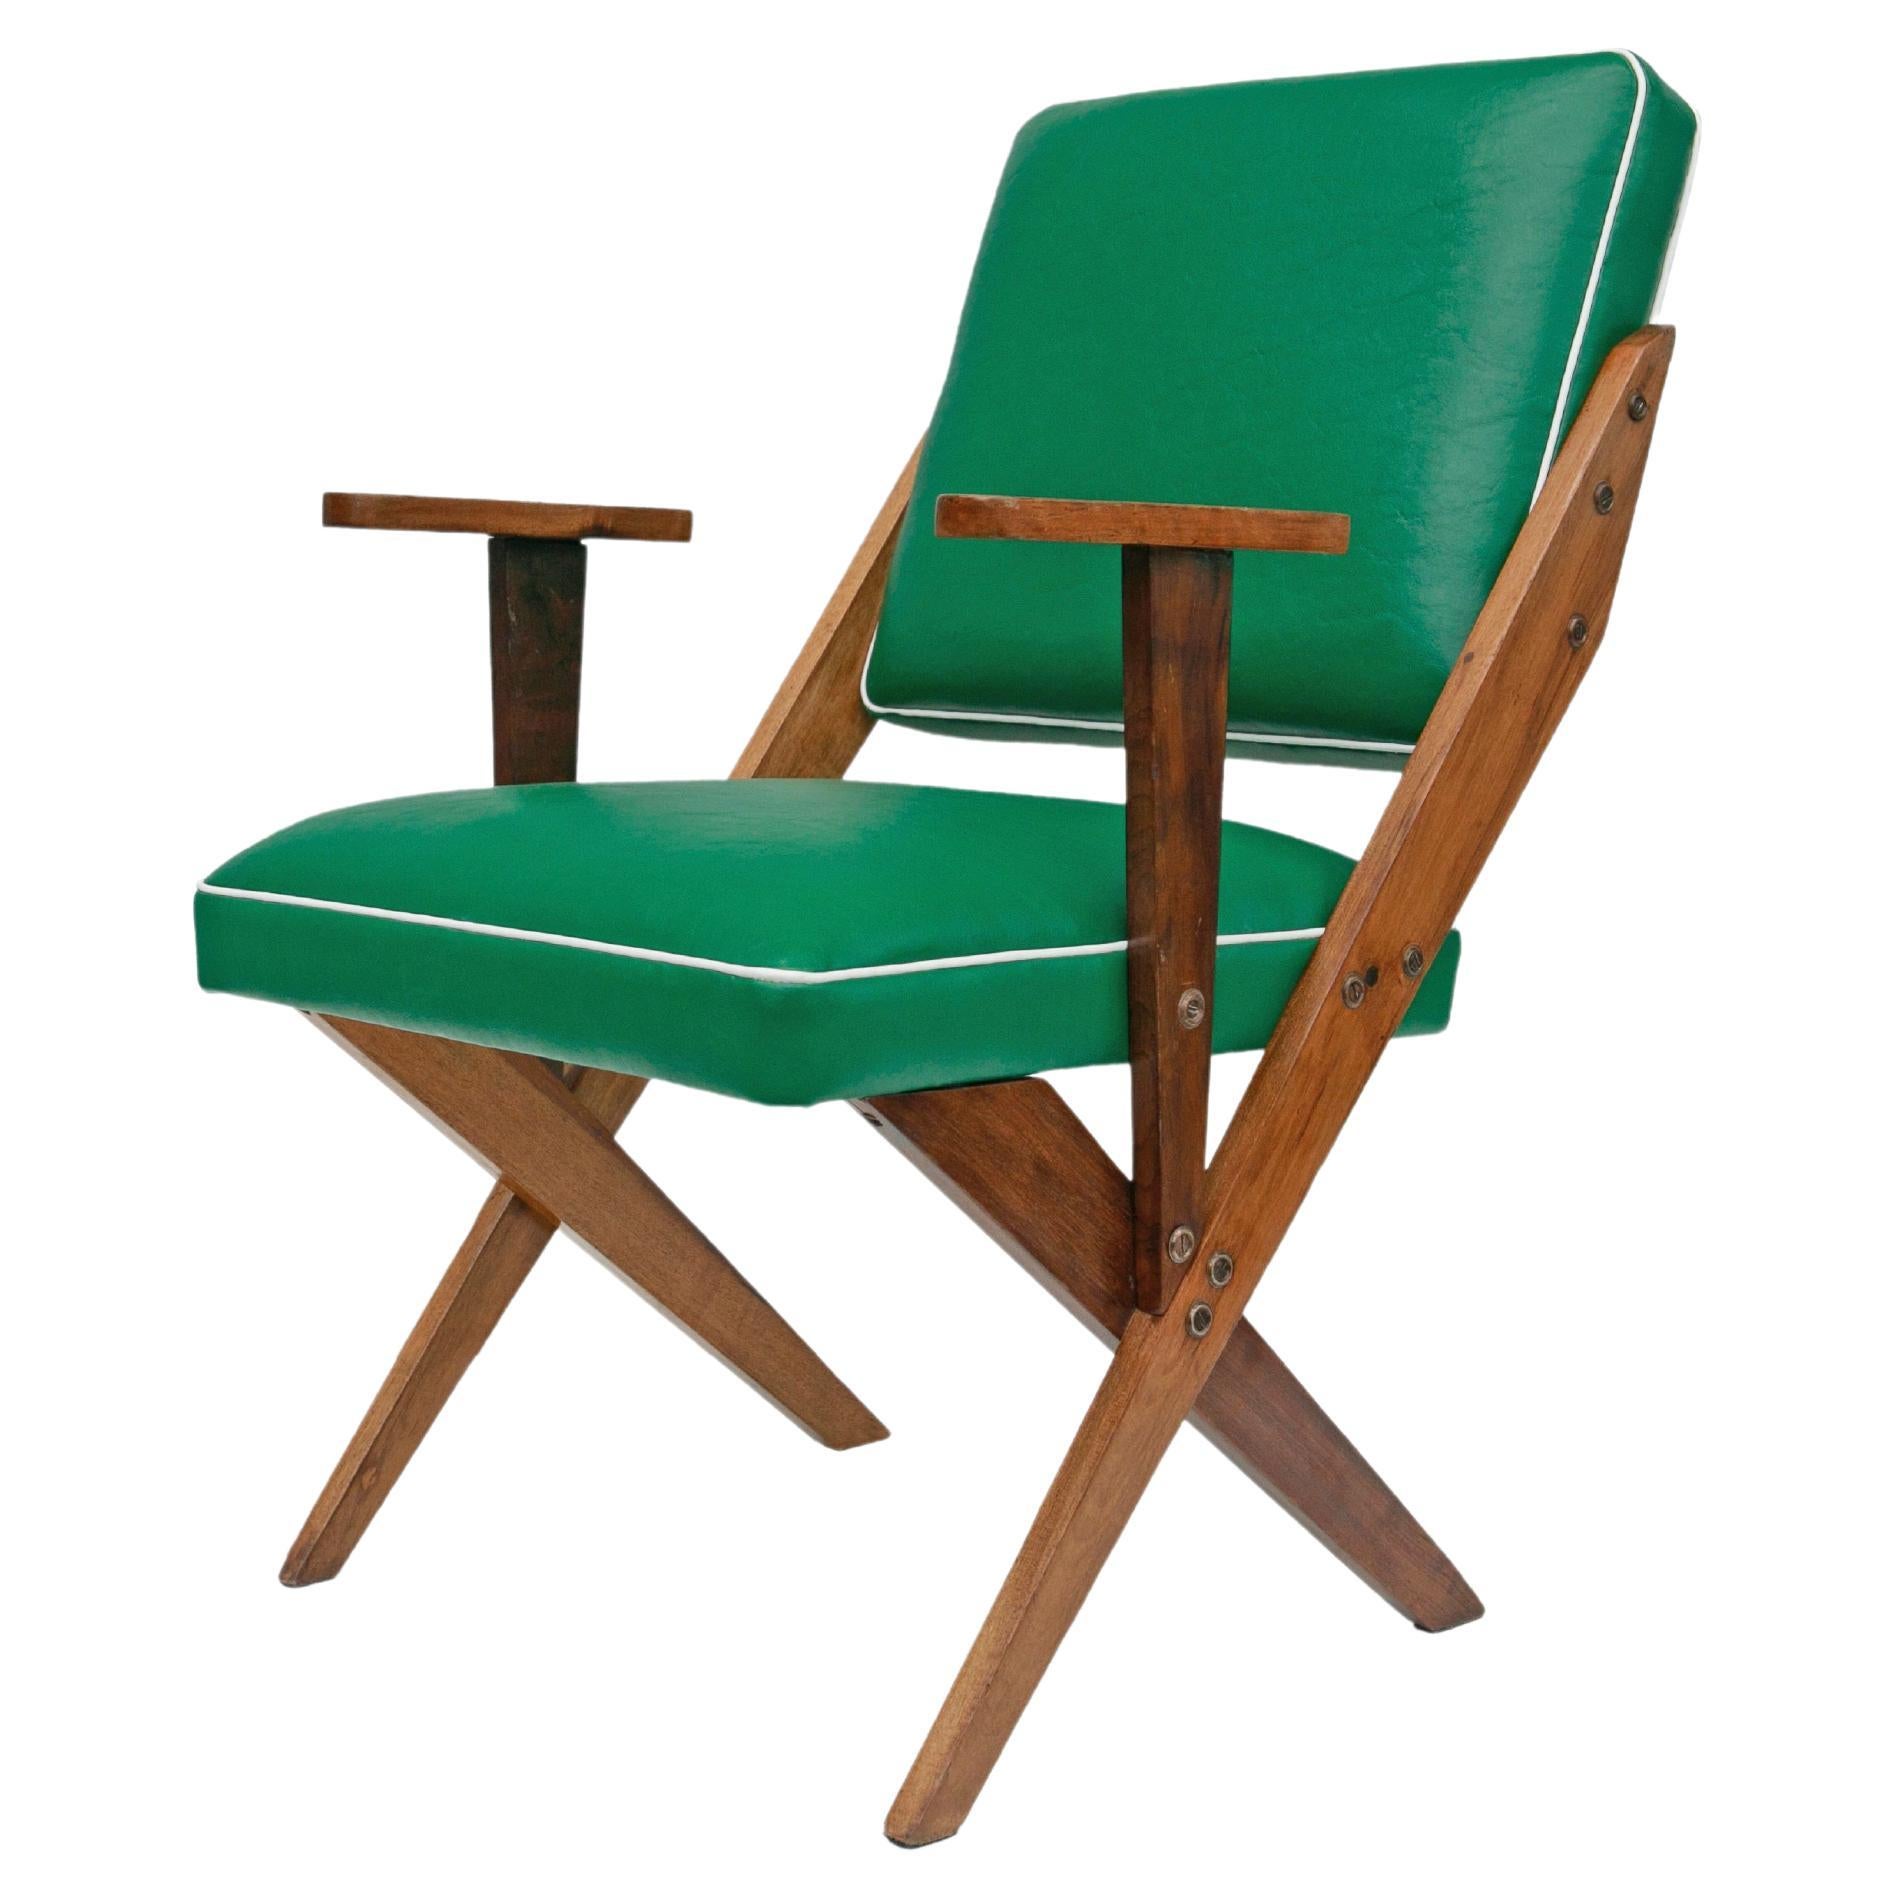 Midcentury Armchair in Wood & Green Faux Leather Jose Zanine Caldas c1950 Brazil For Sale